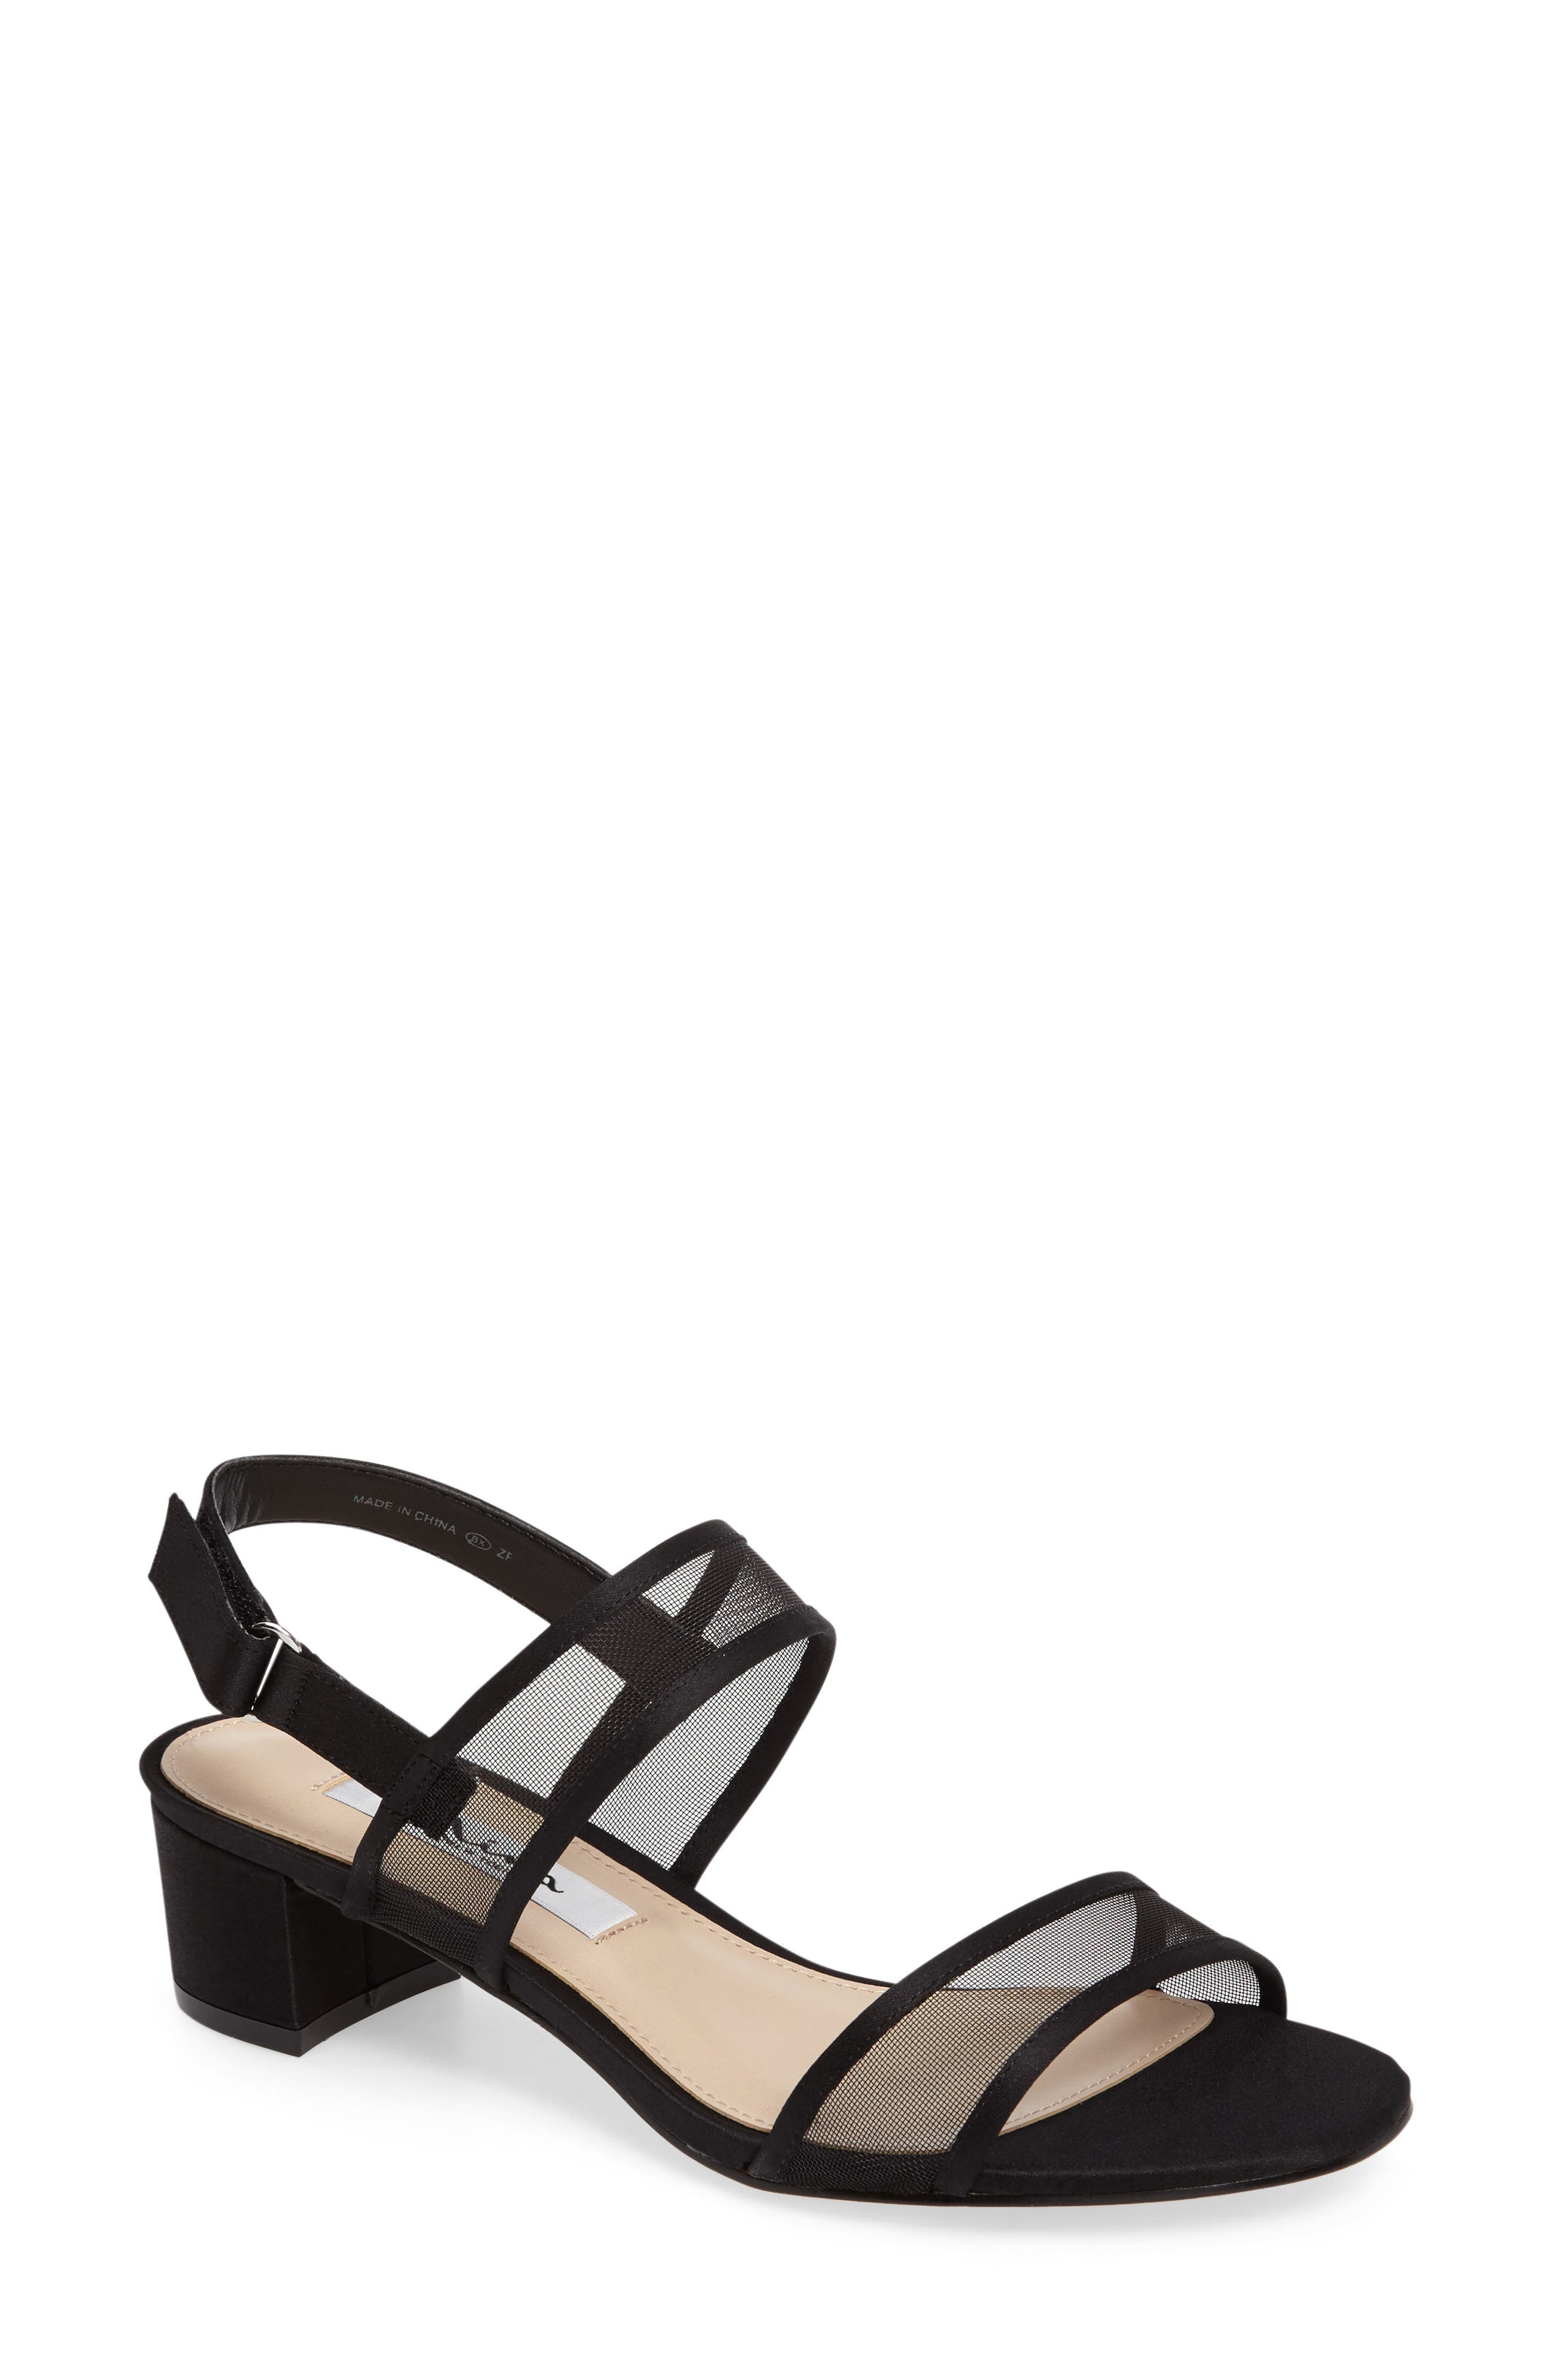 UPC 716142950805 product image for Women's Nina Ganice Mesh Strap Sandal, Size 9.5 M - Black | upcitemdb.com